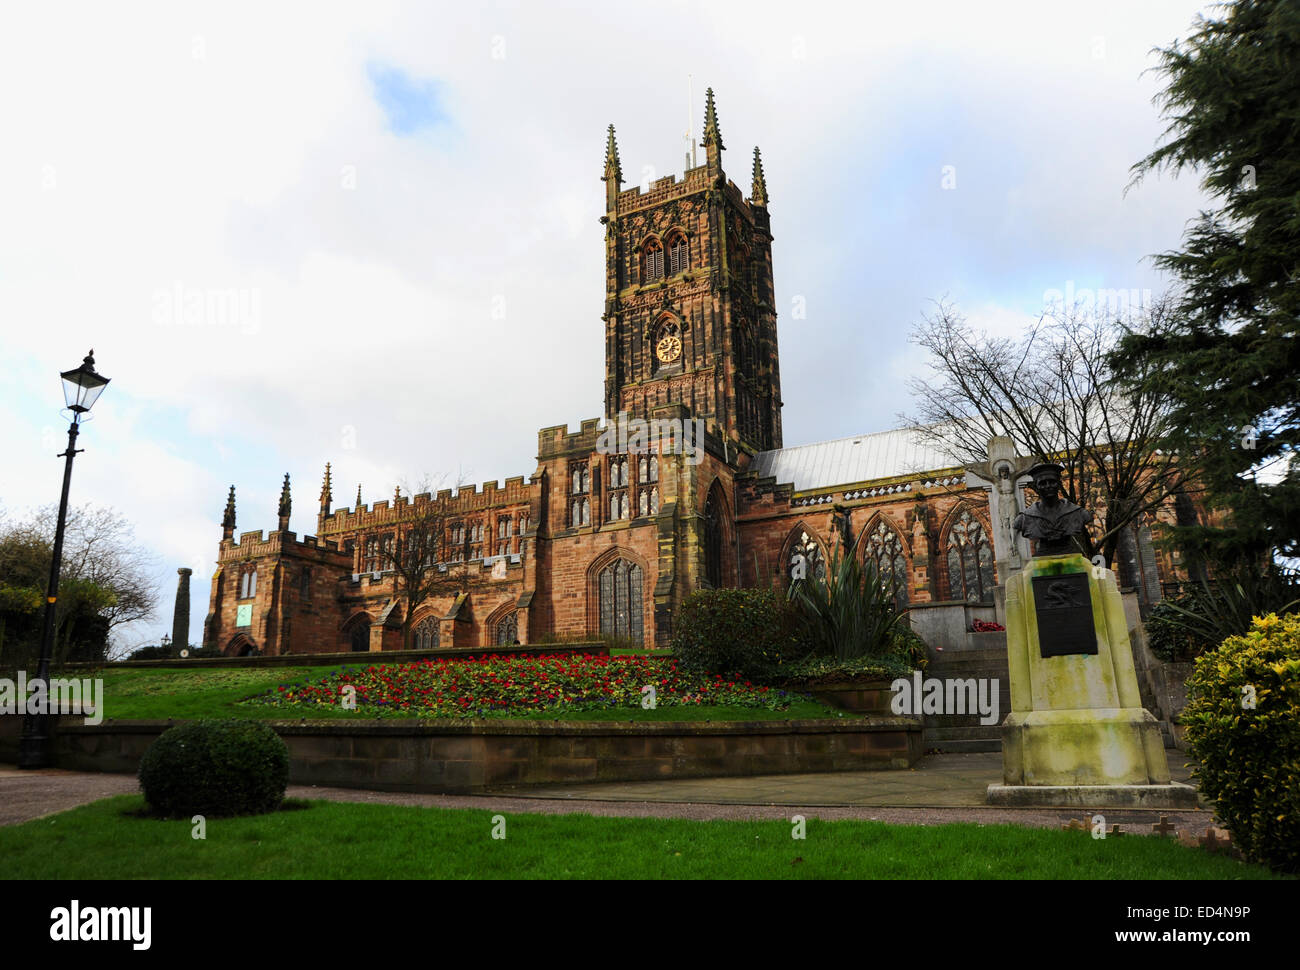 Wolverhampton West Midlands UK - St Peter's Collegiate Church is the